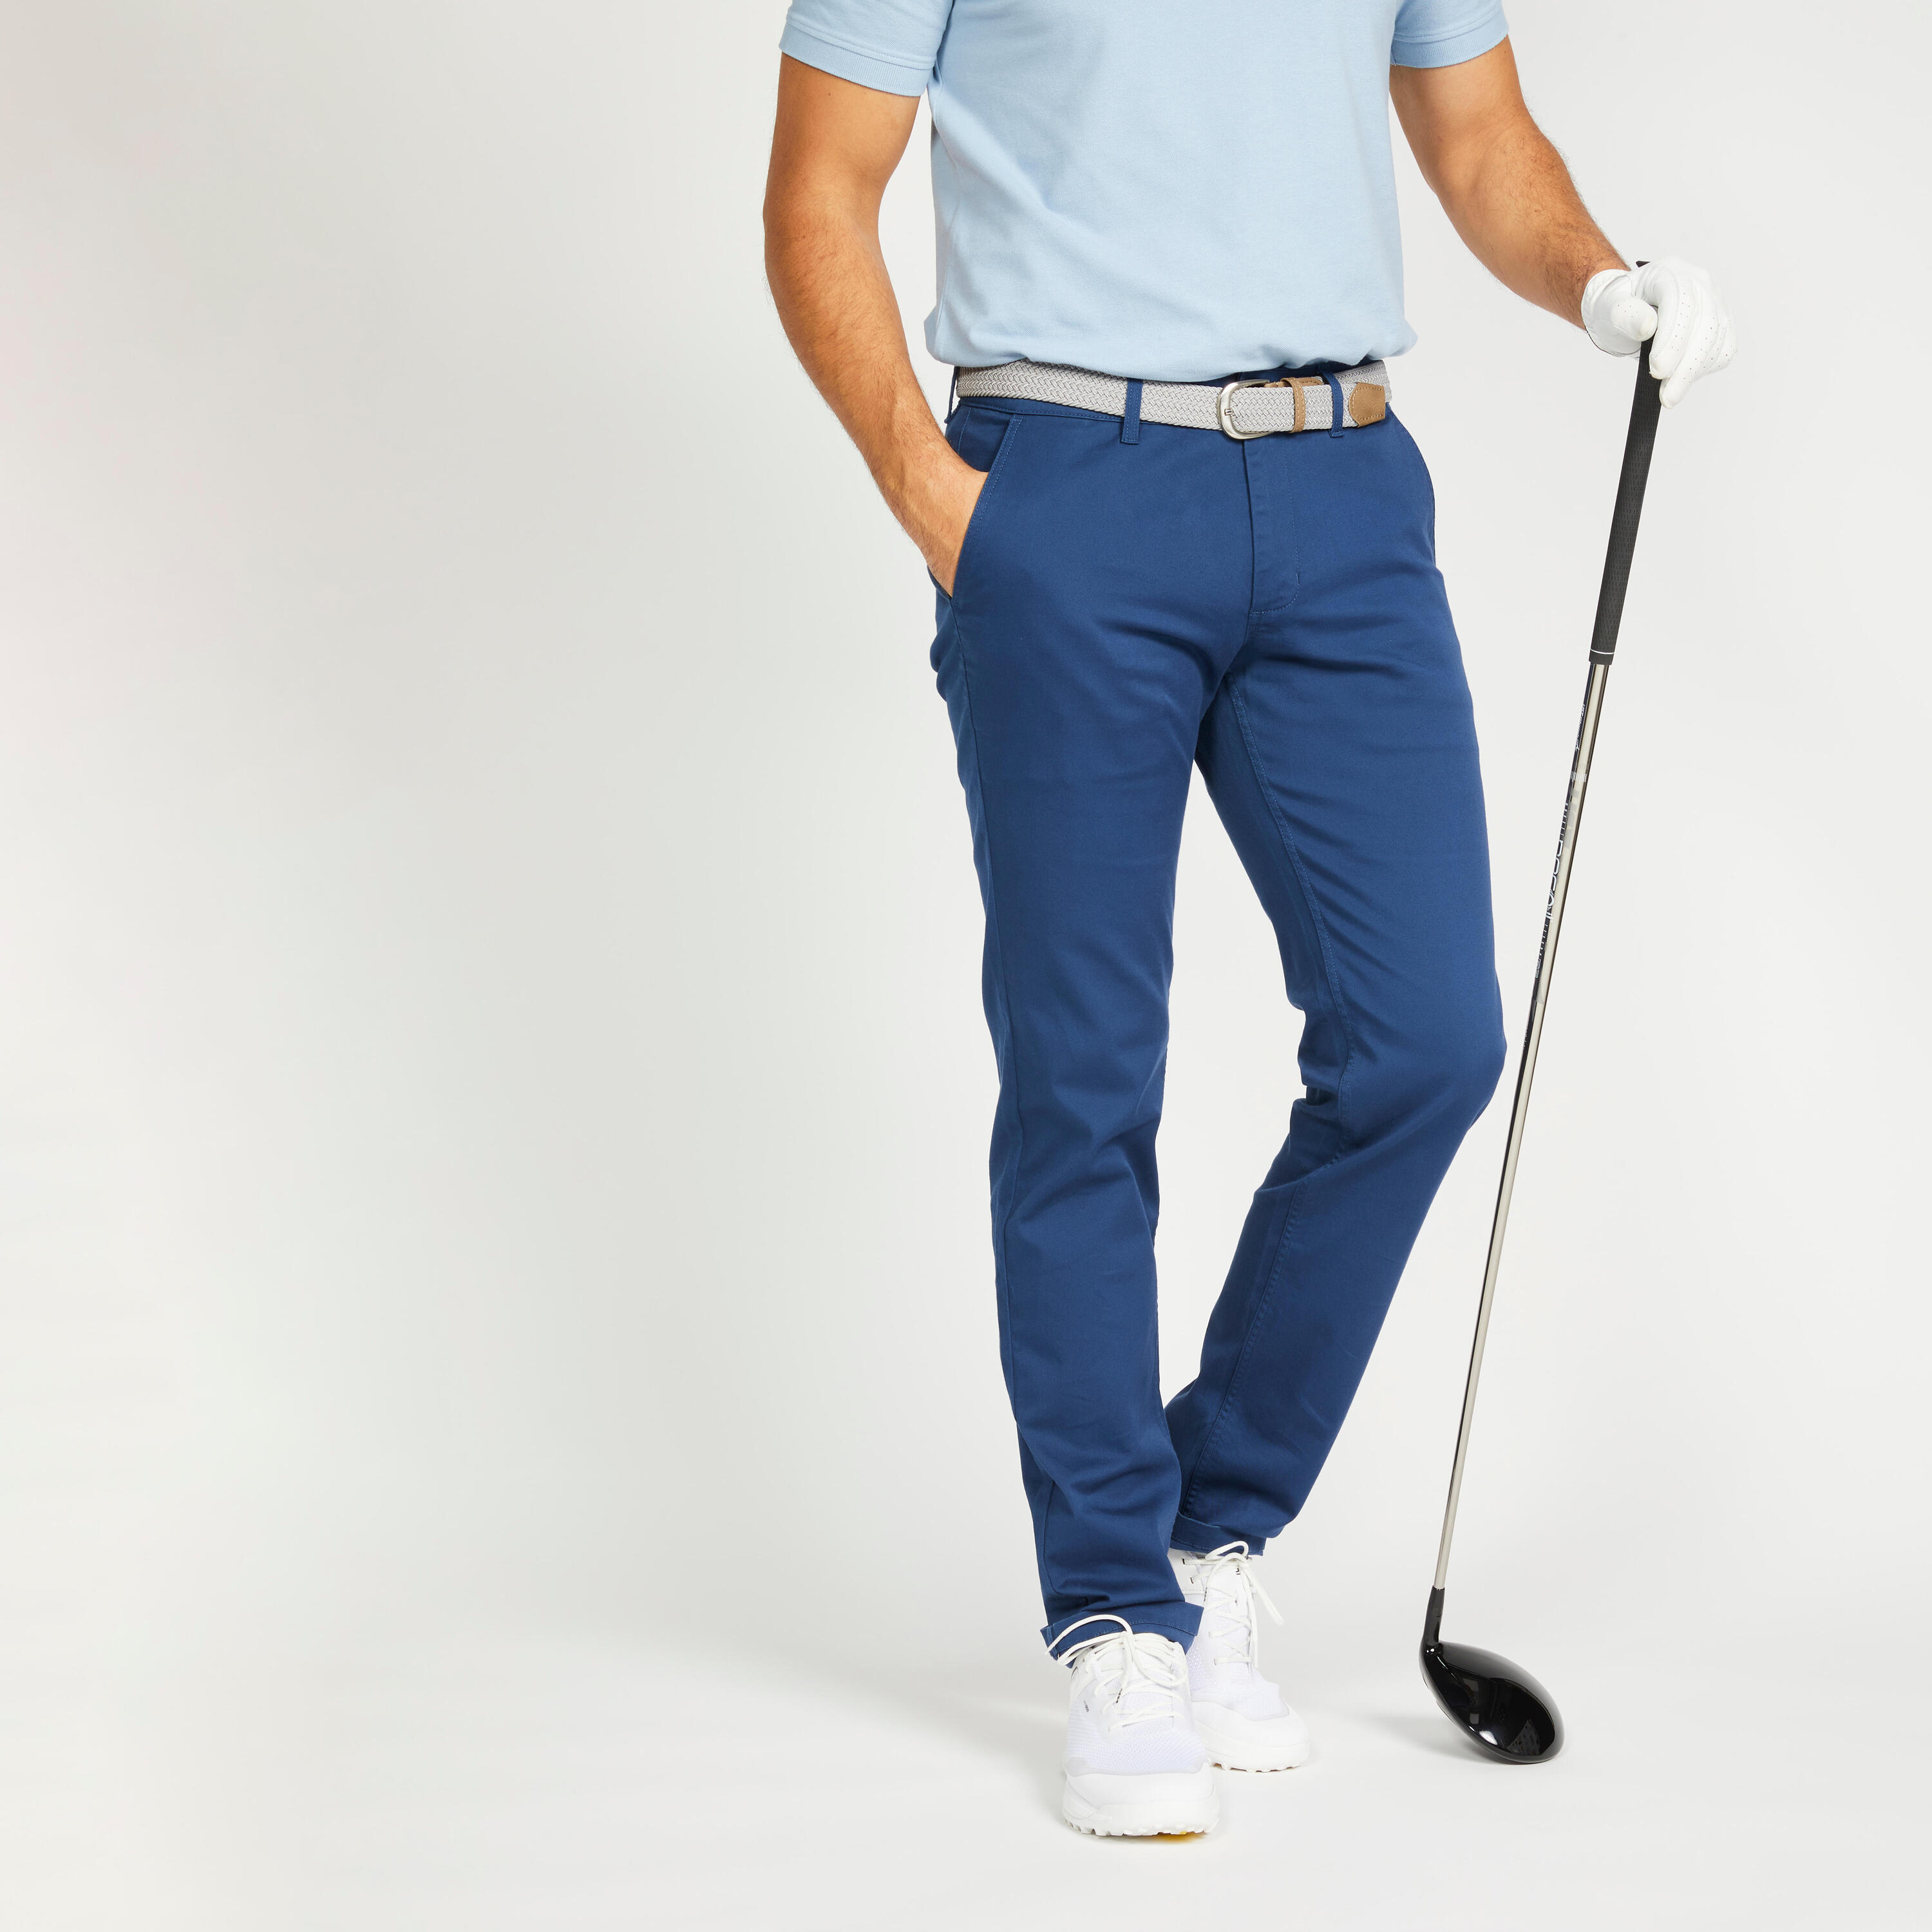 INESIS Men's golf trousers - MW500 blue